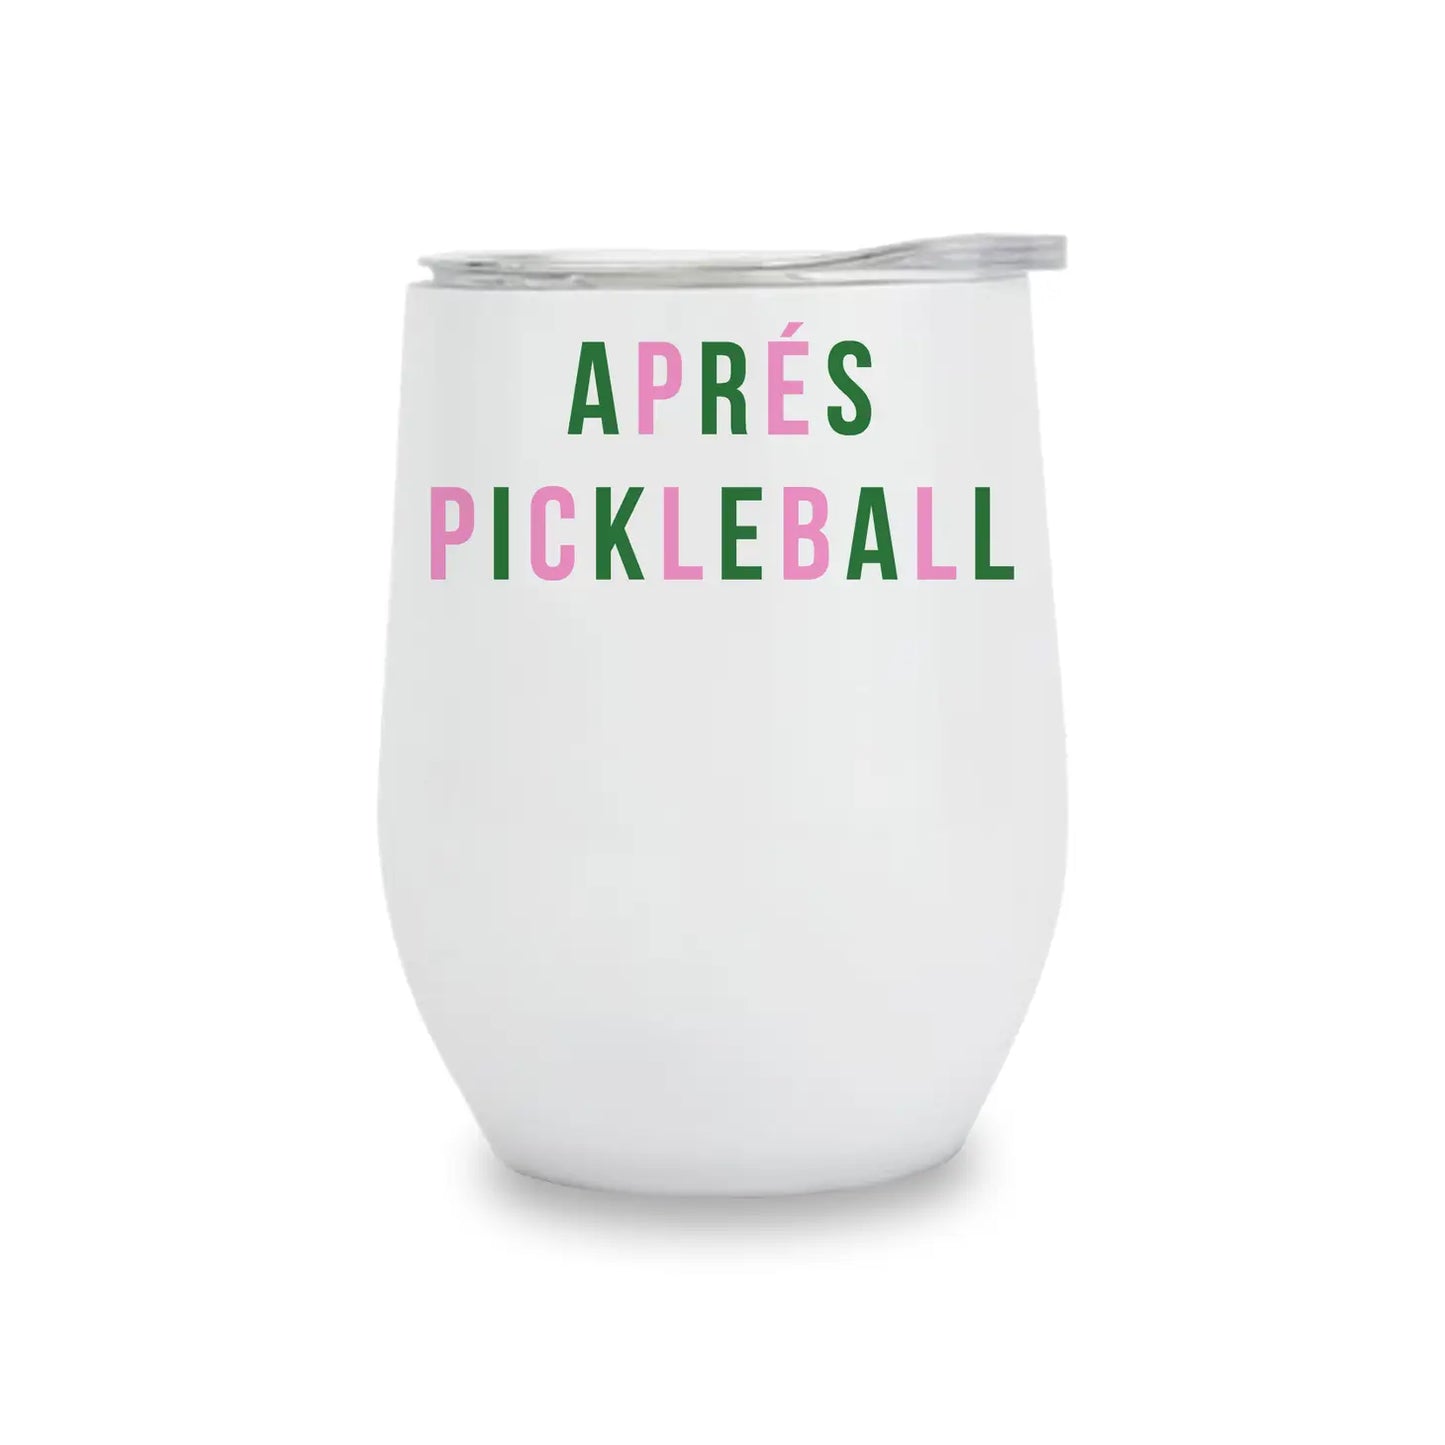 Apre's Pickleball Insulated Wine Cup